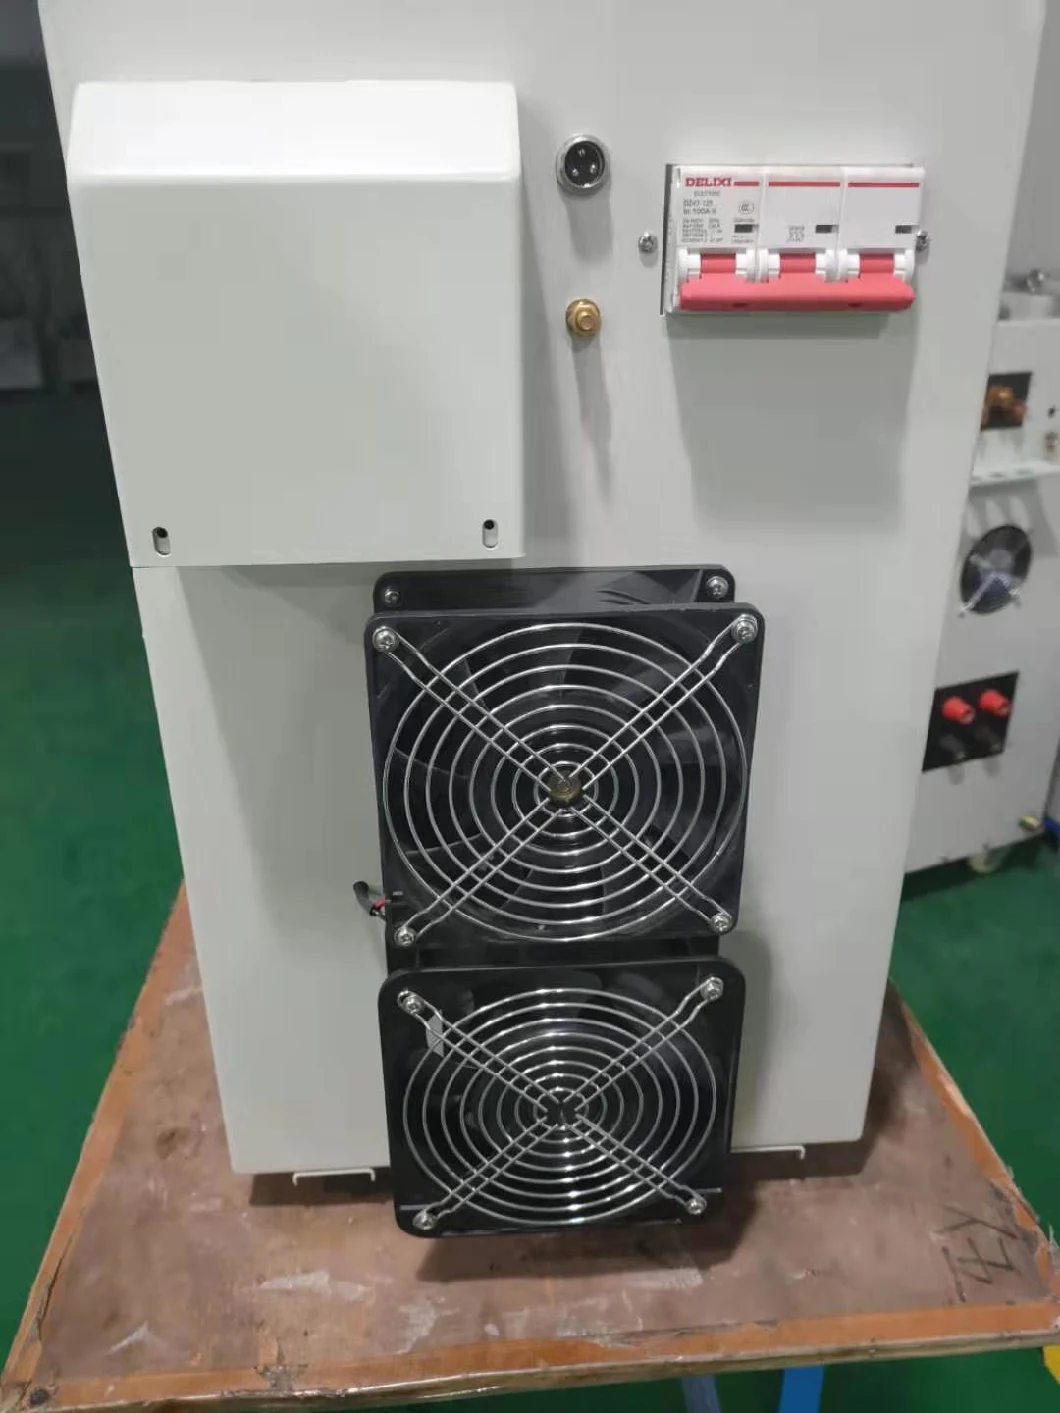 DSP-35kw Digital Induction Heating Equipment